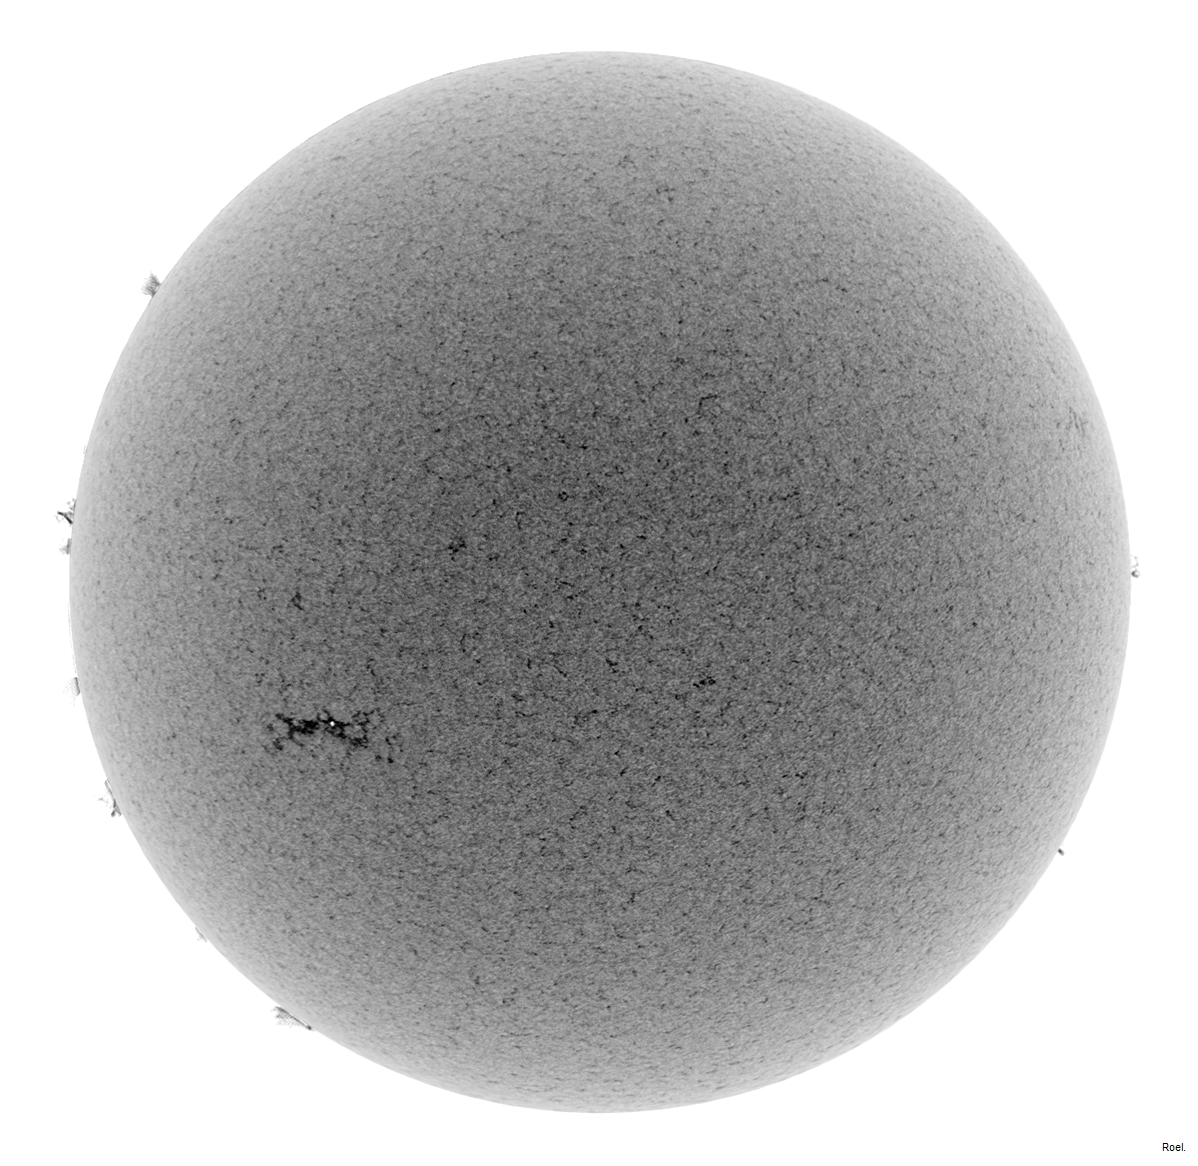 Sol del 1 de agosto del 2018-Meade-CaK-PSTmod-2neg.jpg